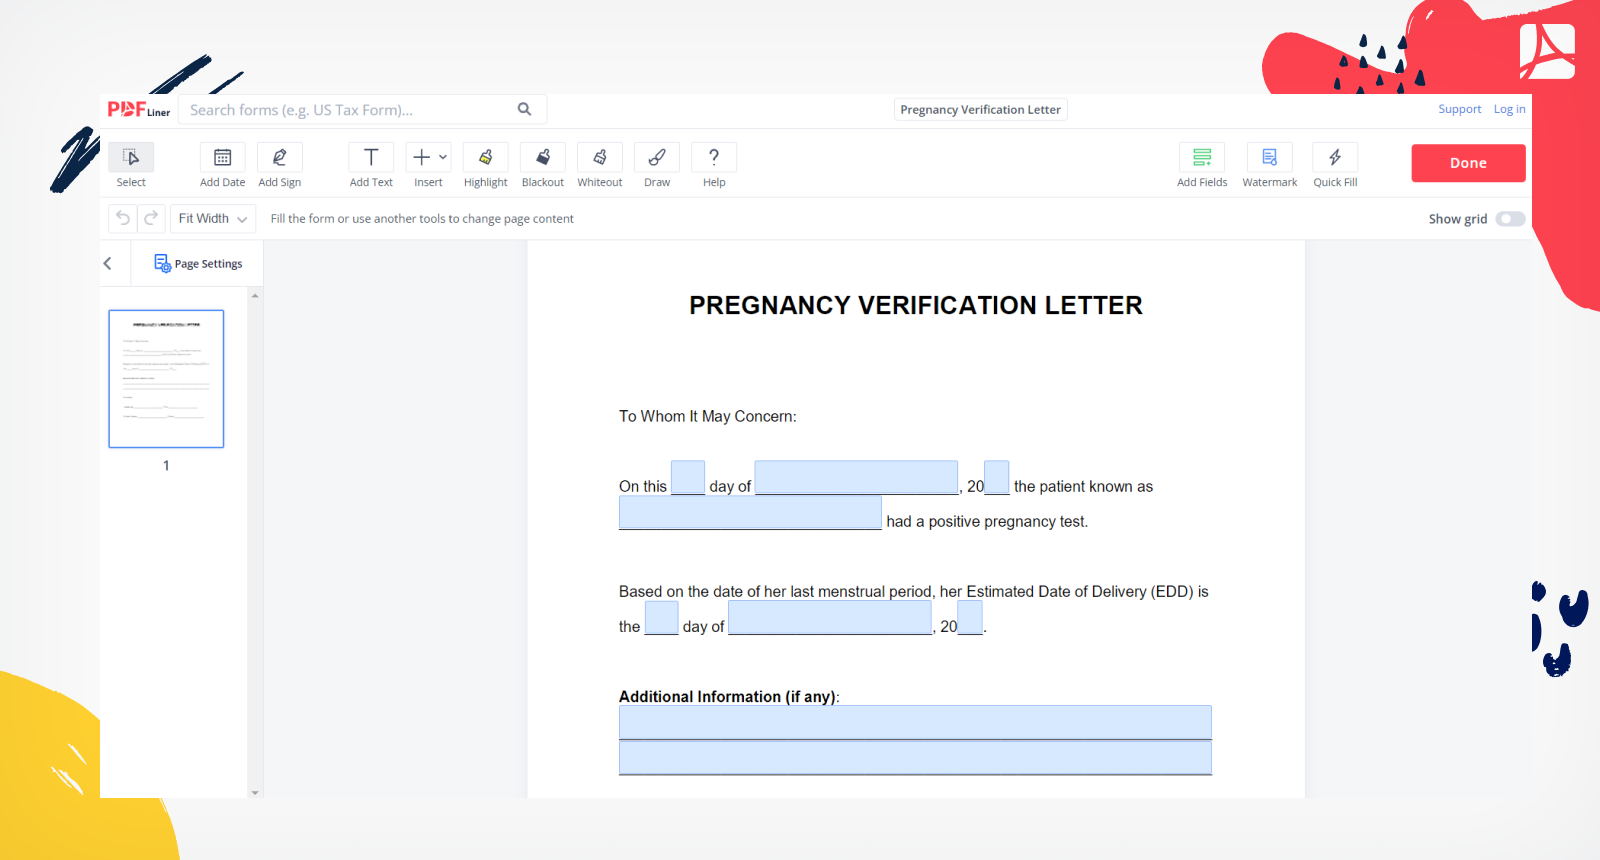 Pregnancy Verification Letter Screenshot